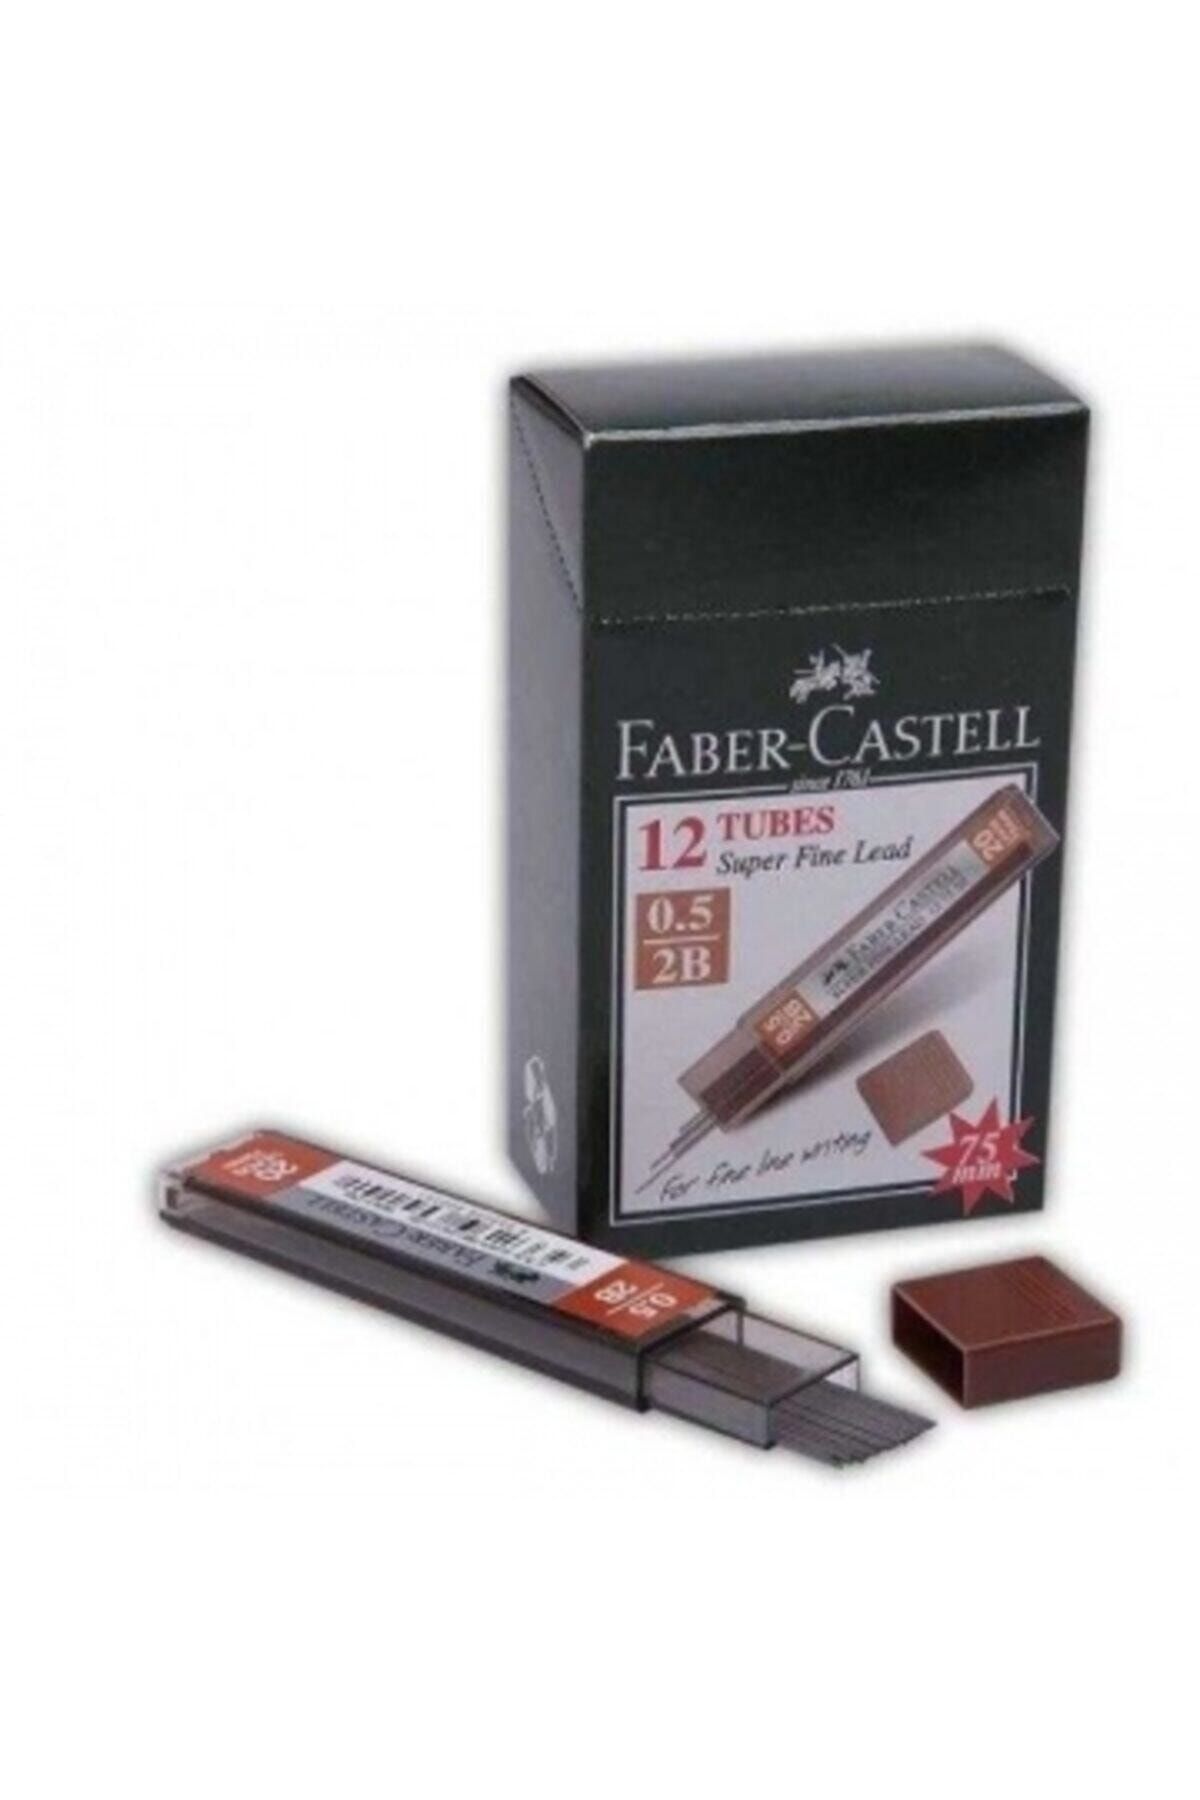 Faber Castell Faber-castell Super Fine Min Kalem Uçu Siyah 0.5 Mm 2b ×12 Adet